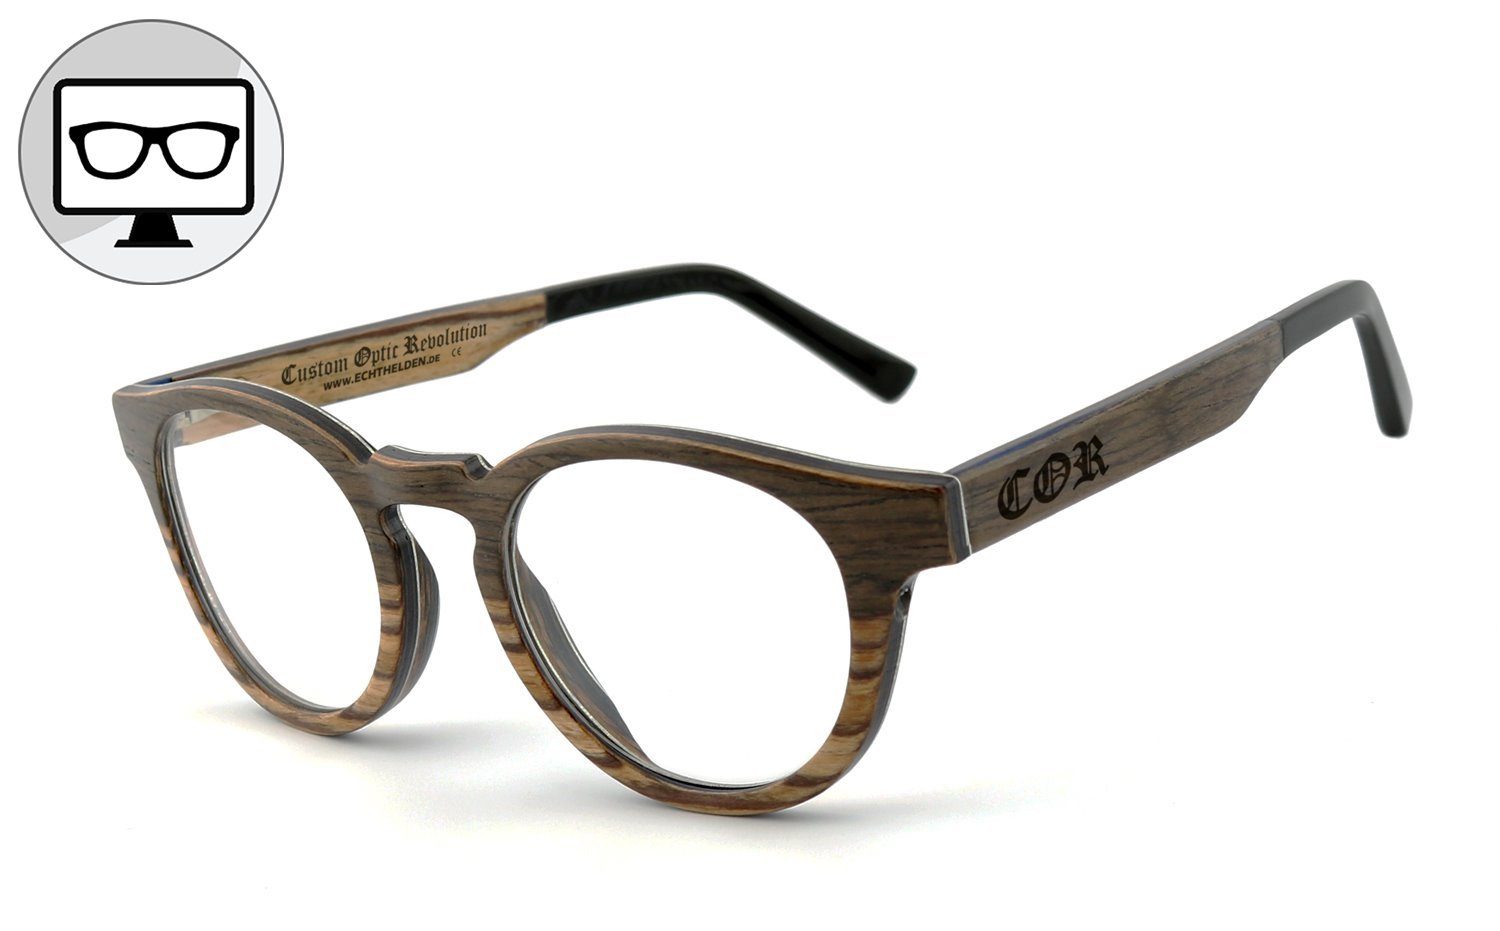 Bildschirmbrille, COR Gamingbrille, Brille Blaulichtfilter Blaulicht Brille, Brille, Bürobrille, Holzbrille